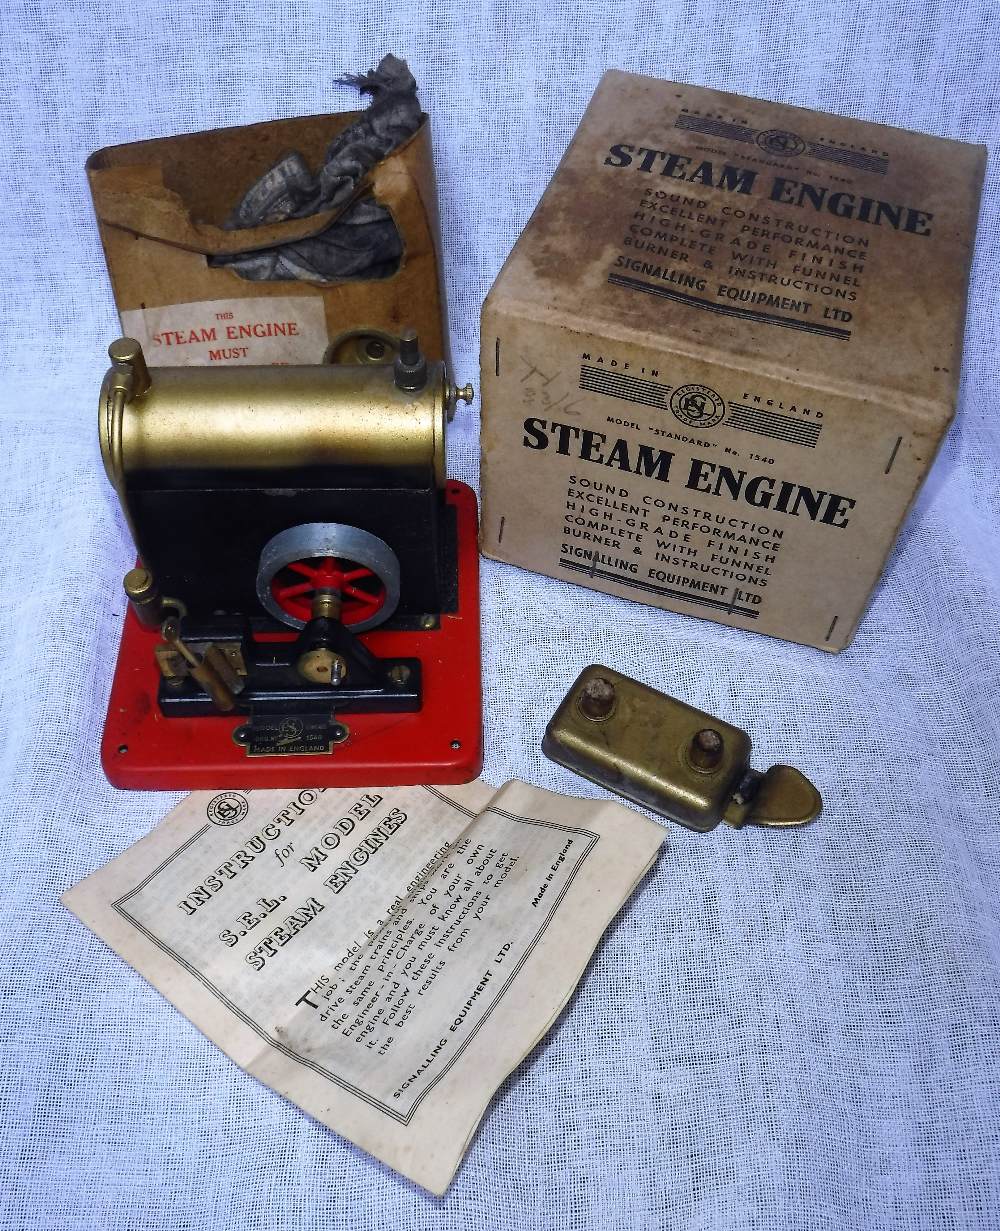 SIGNALLING EQUIPMENT LTD; A VINTAGE STEAM ENGINE model 1540 with original box, insert and